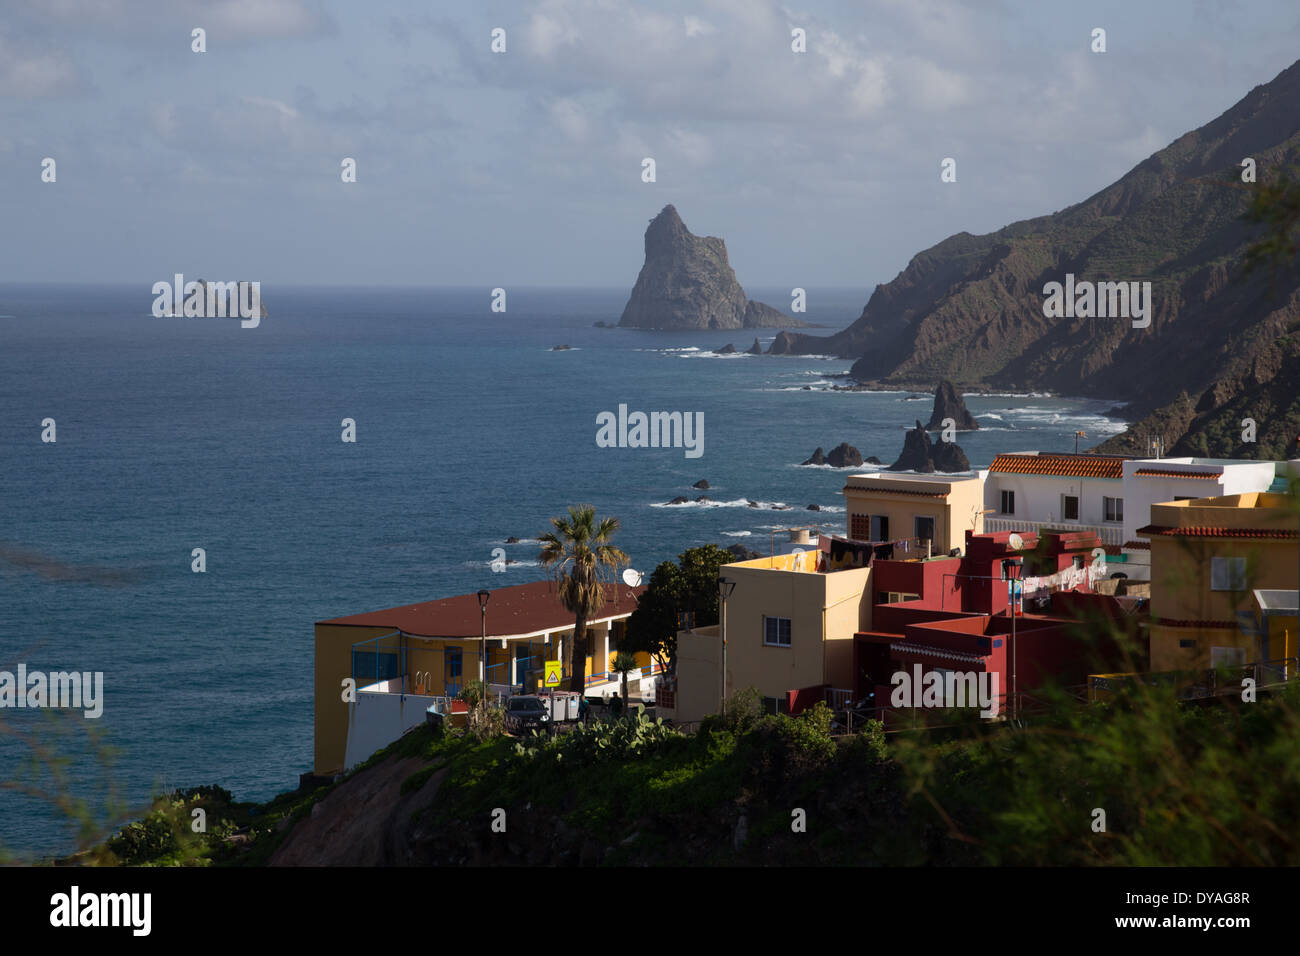 Almaciga and the rocky coastline of northern Tenerife Stock Photo